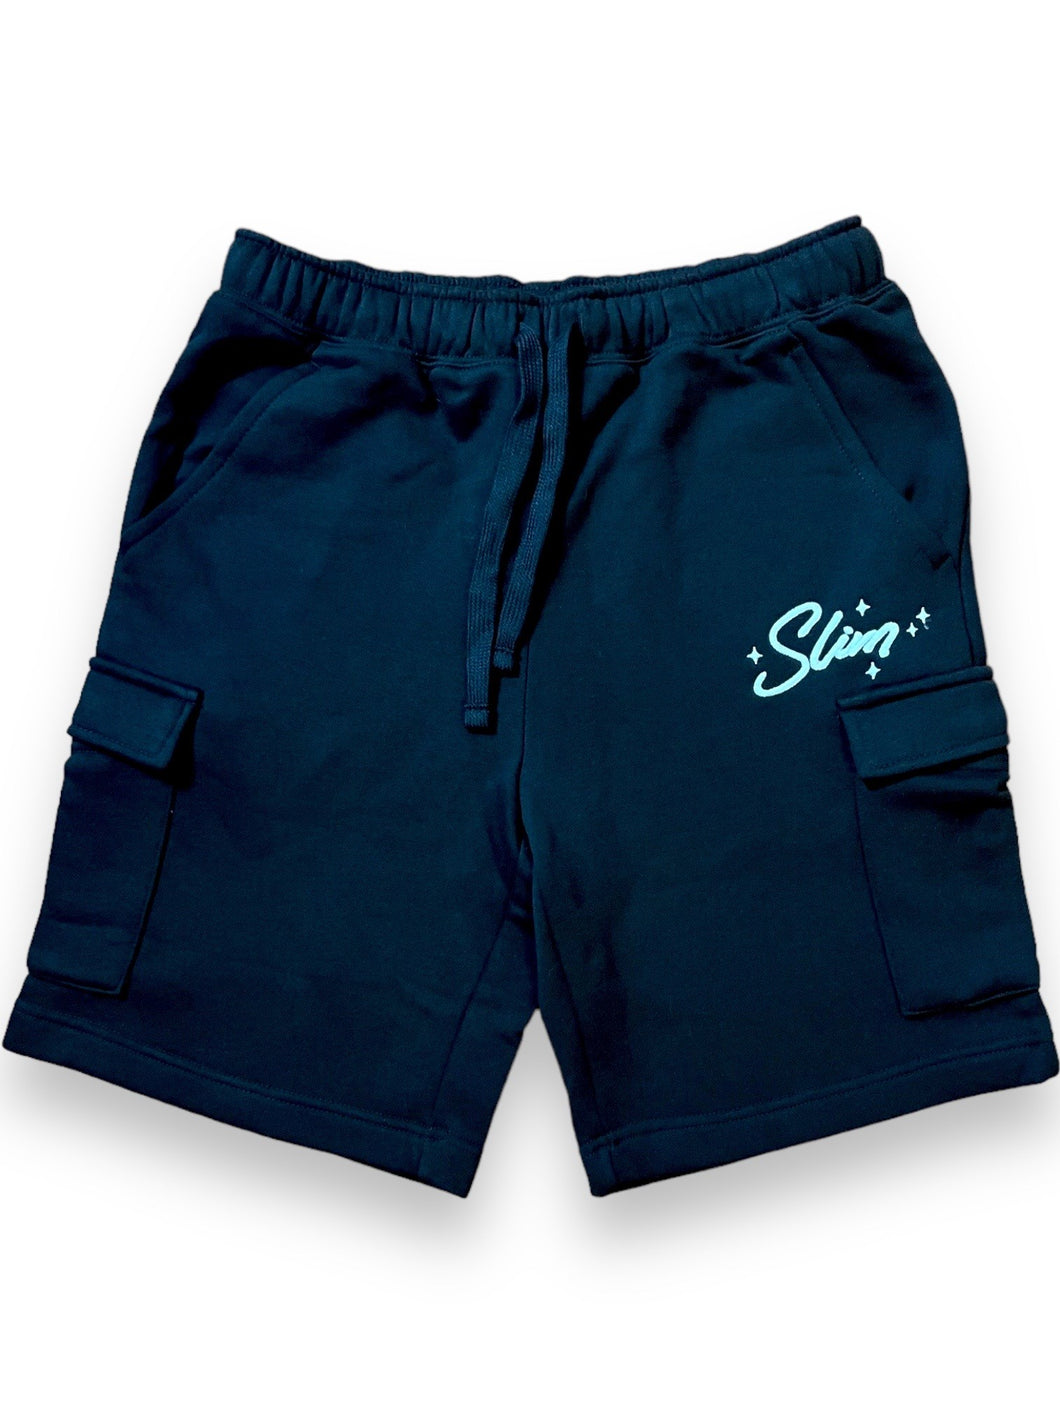 Slim GLOW Cargo Shorts (Black)